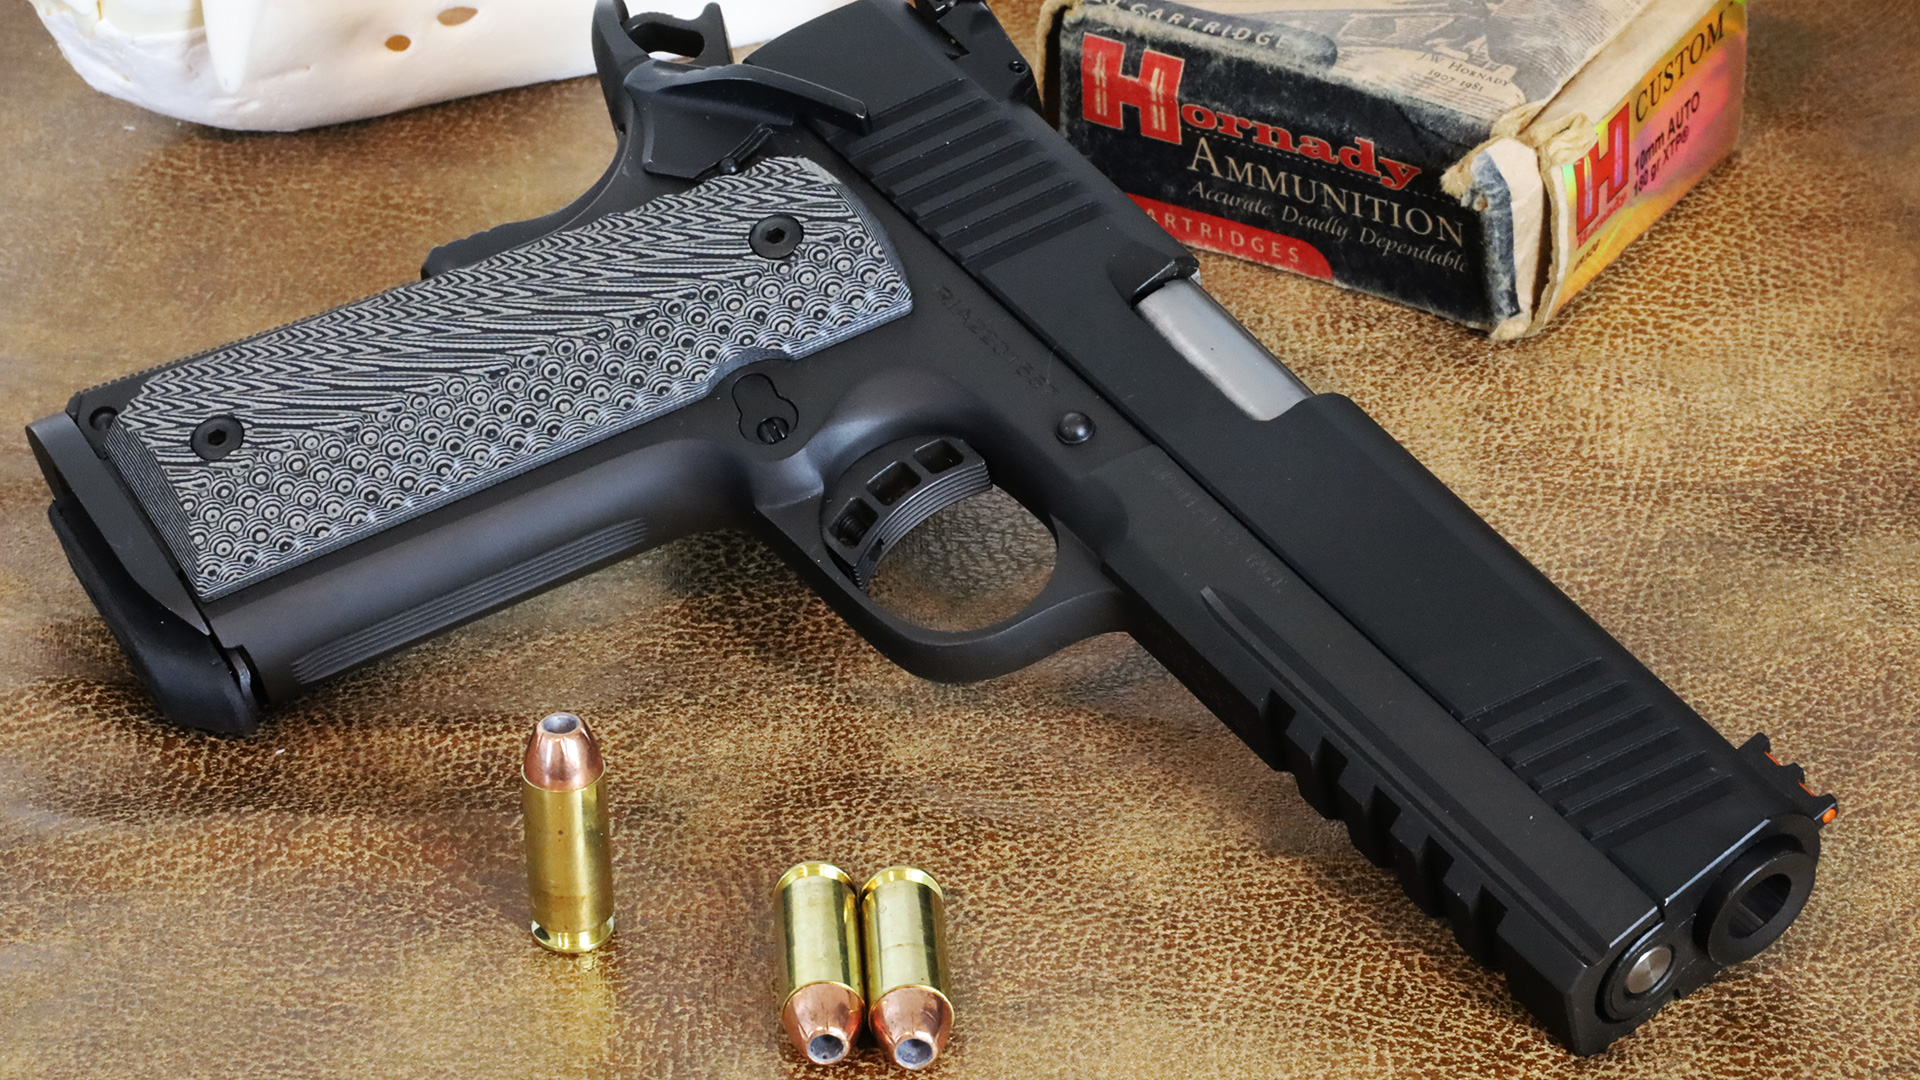 44 caliber magnum pistol cartridge case with 9mm bullet Stock Photo